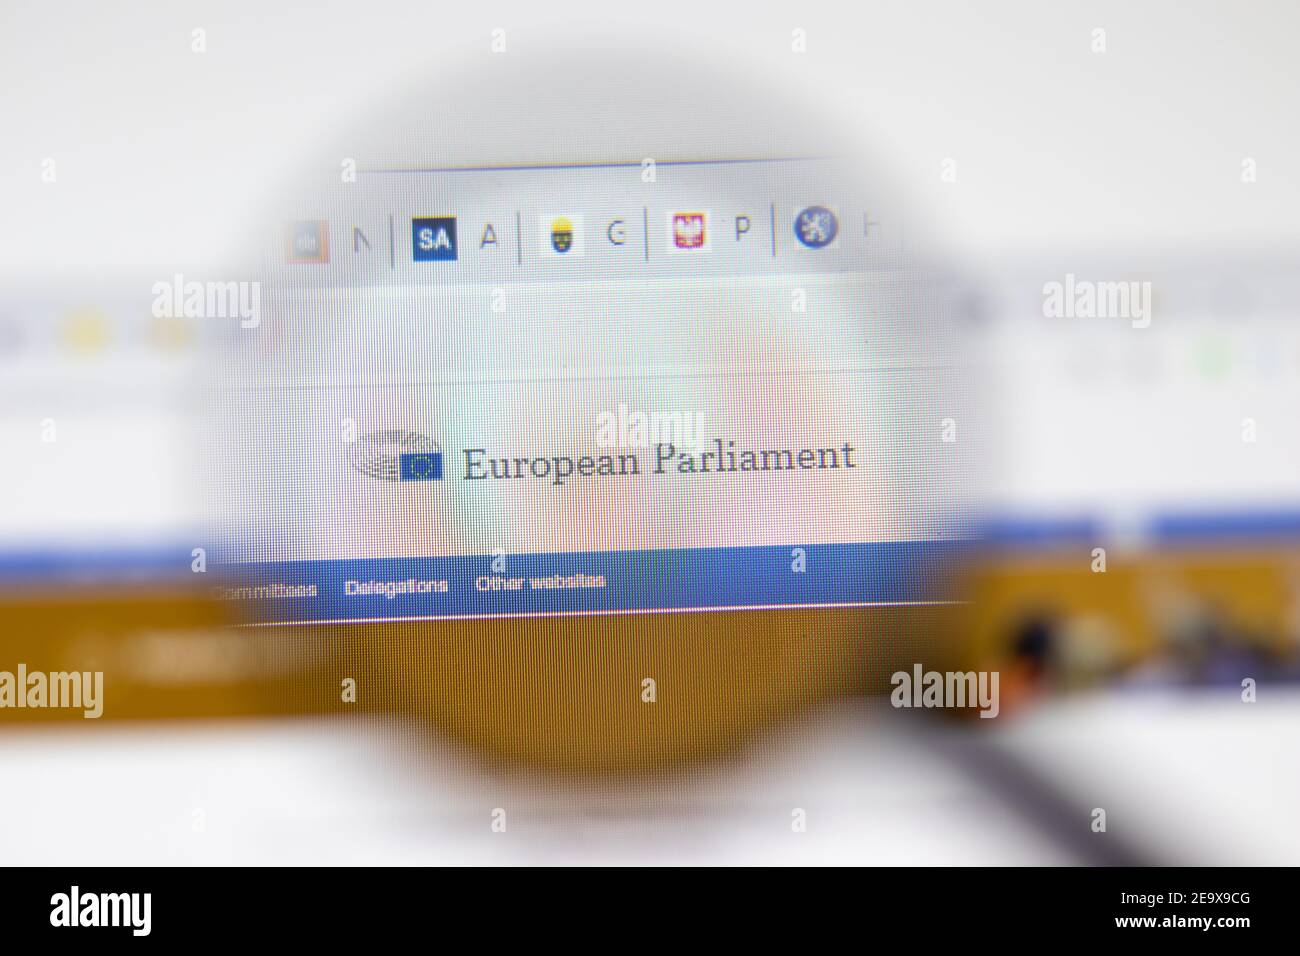 Los Angeles, USA - 1 February 2021: European Parliament website page. Europarl.europa.eu logo on display screen, Illustrative Editorial Stock Photo